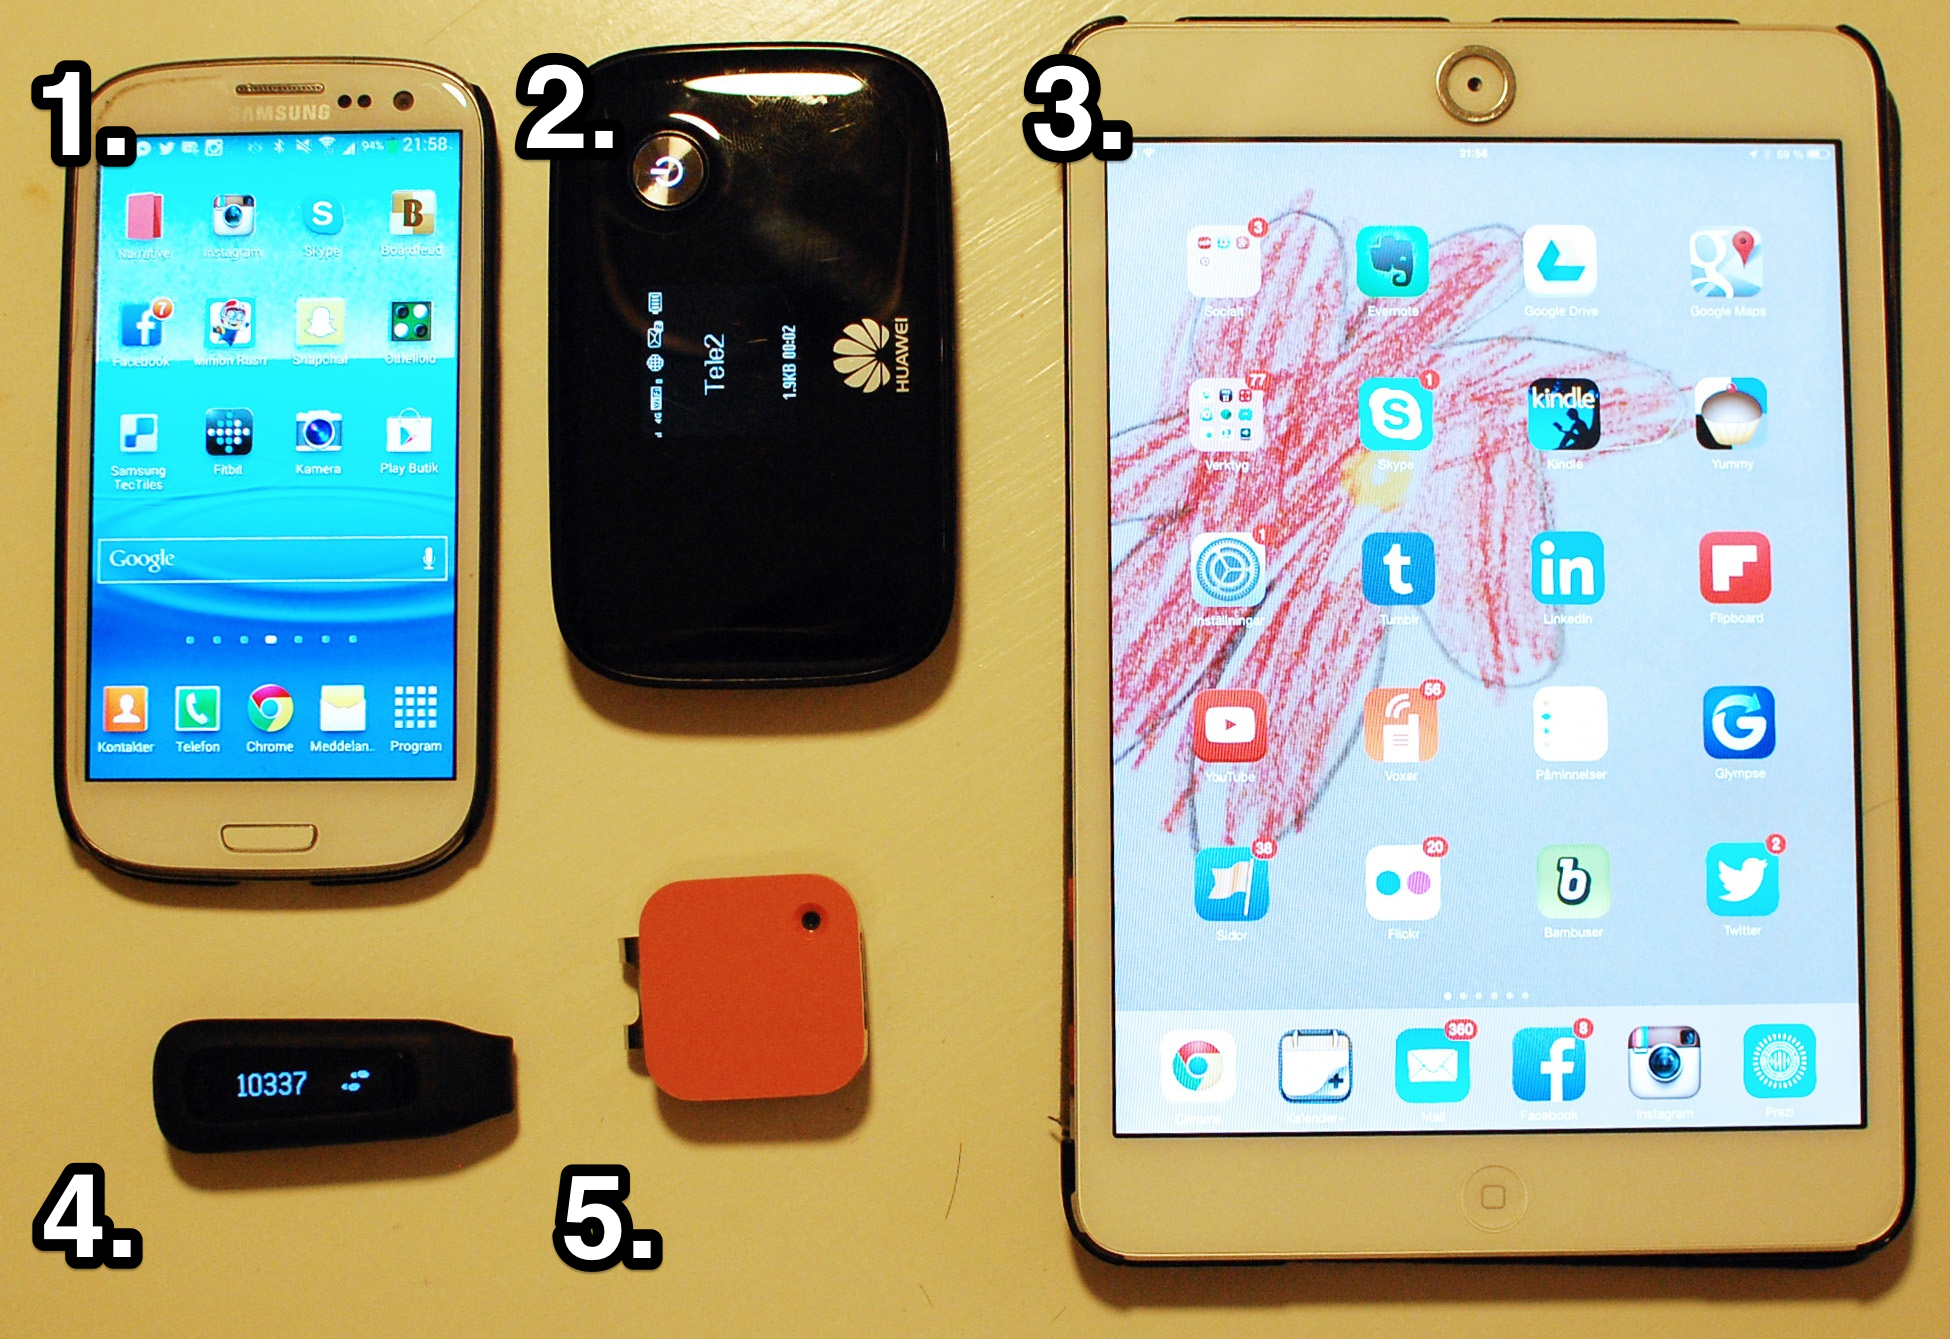 1.Samsung galaxy s3, 2. 4G-router, 3.Ipad mini, 4.Fitbit, 5.Narrative-clip